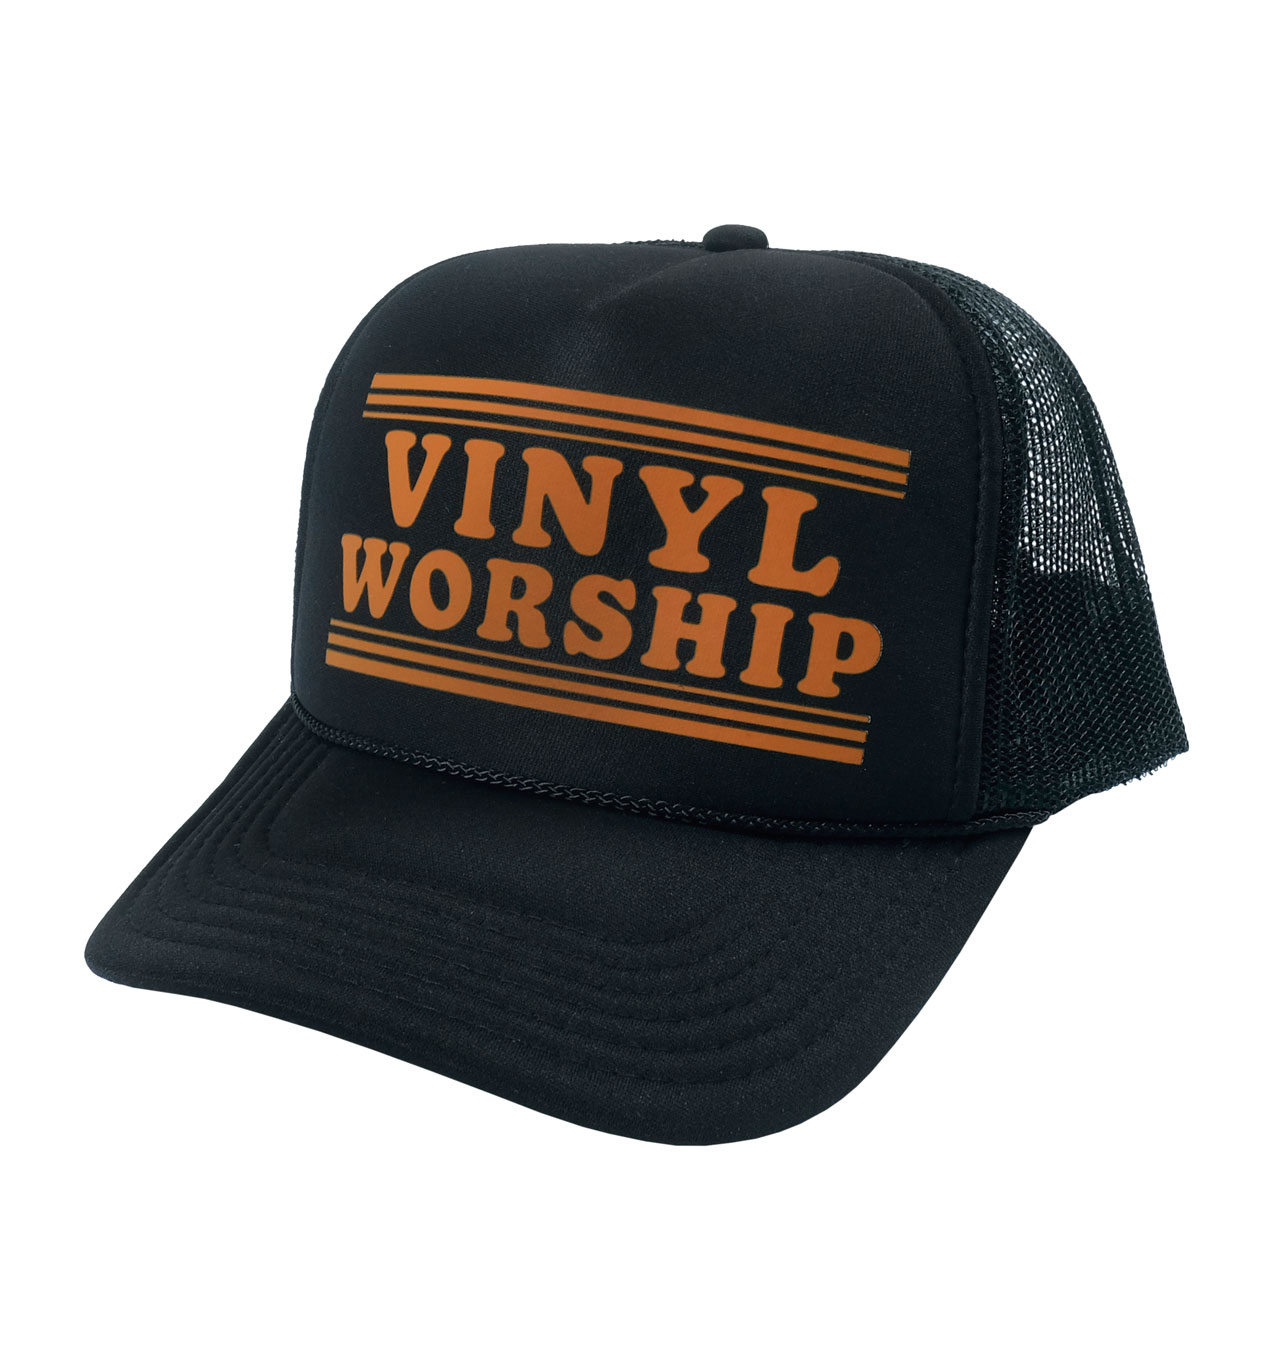 Mangobeard - Vinyl Worship Trucker Cap - Black